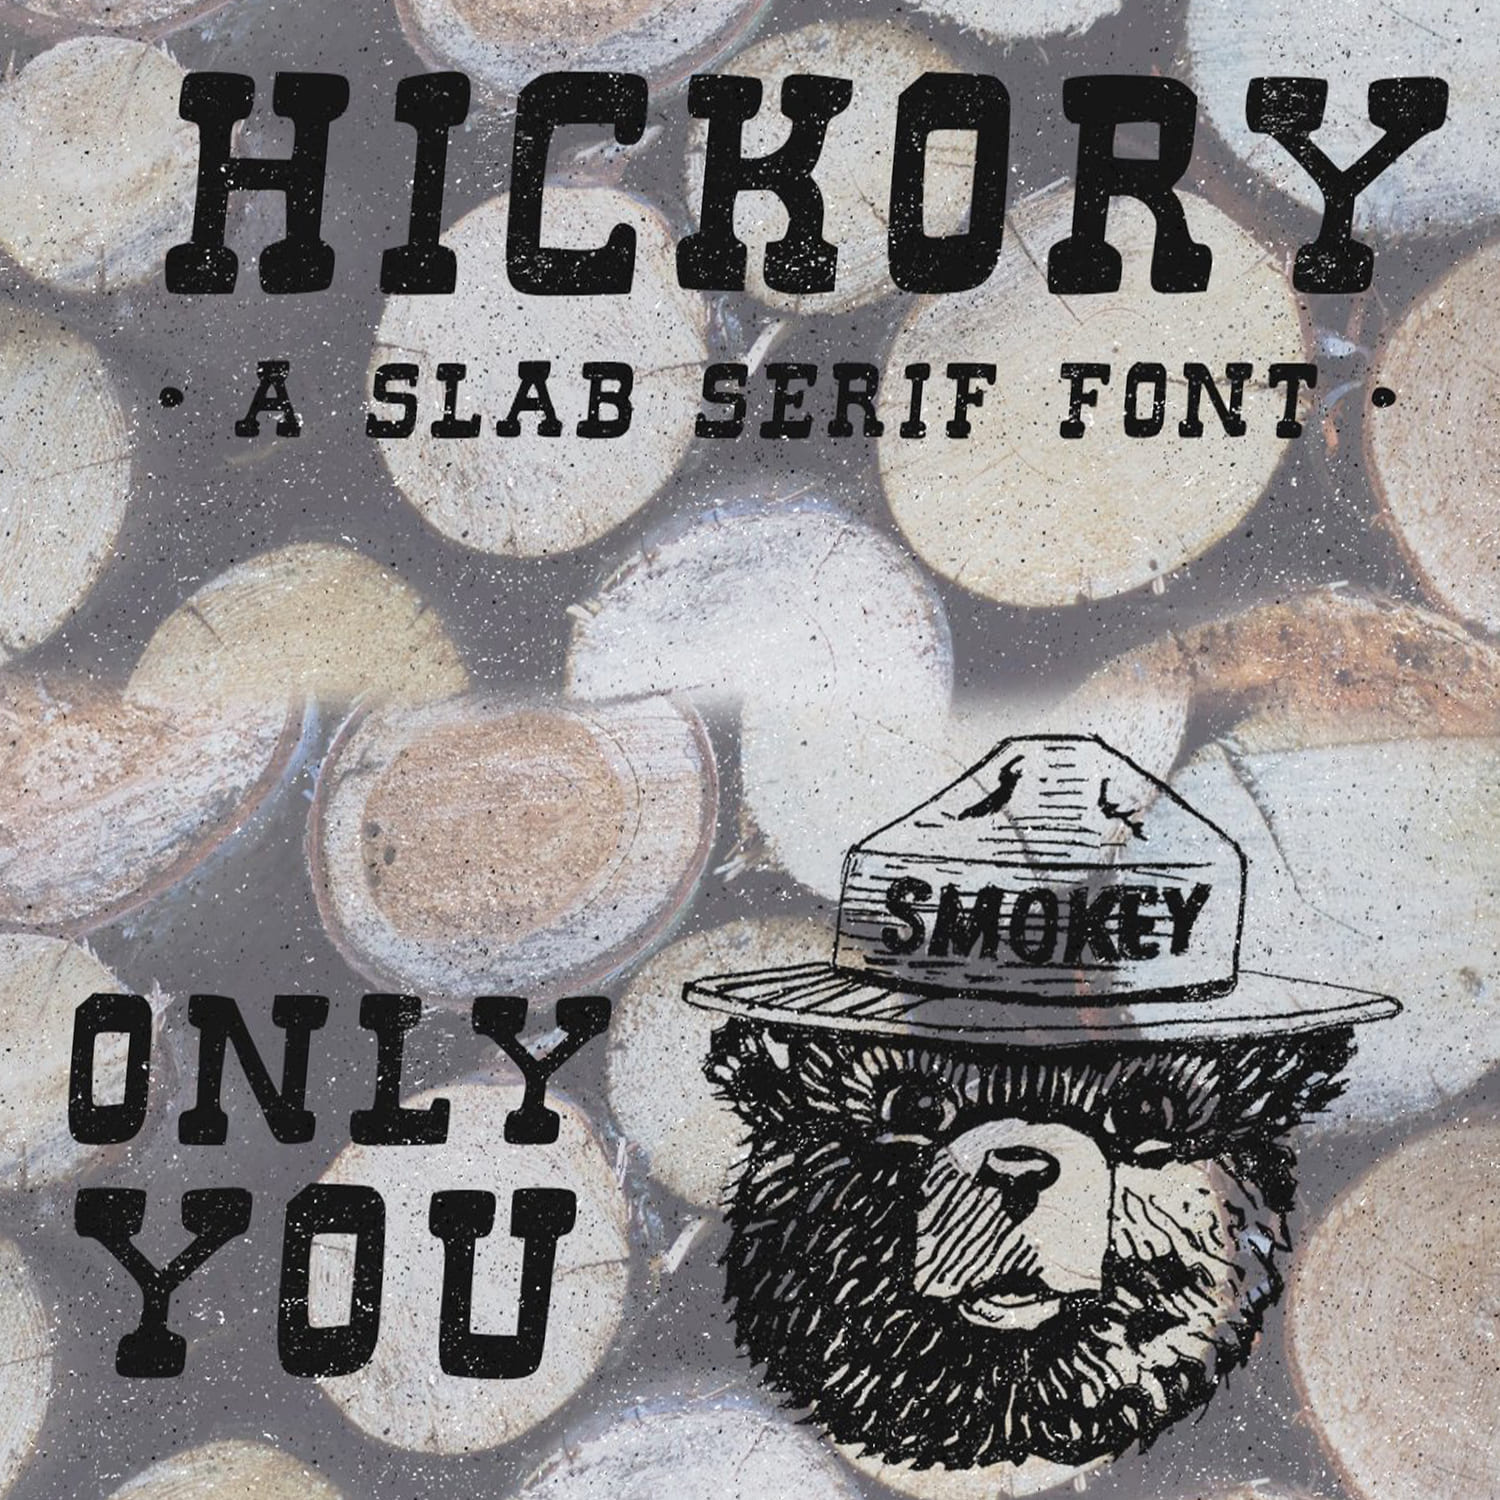 Hickory - Slab cover image.